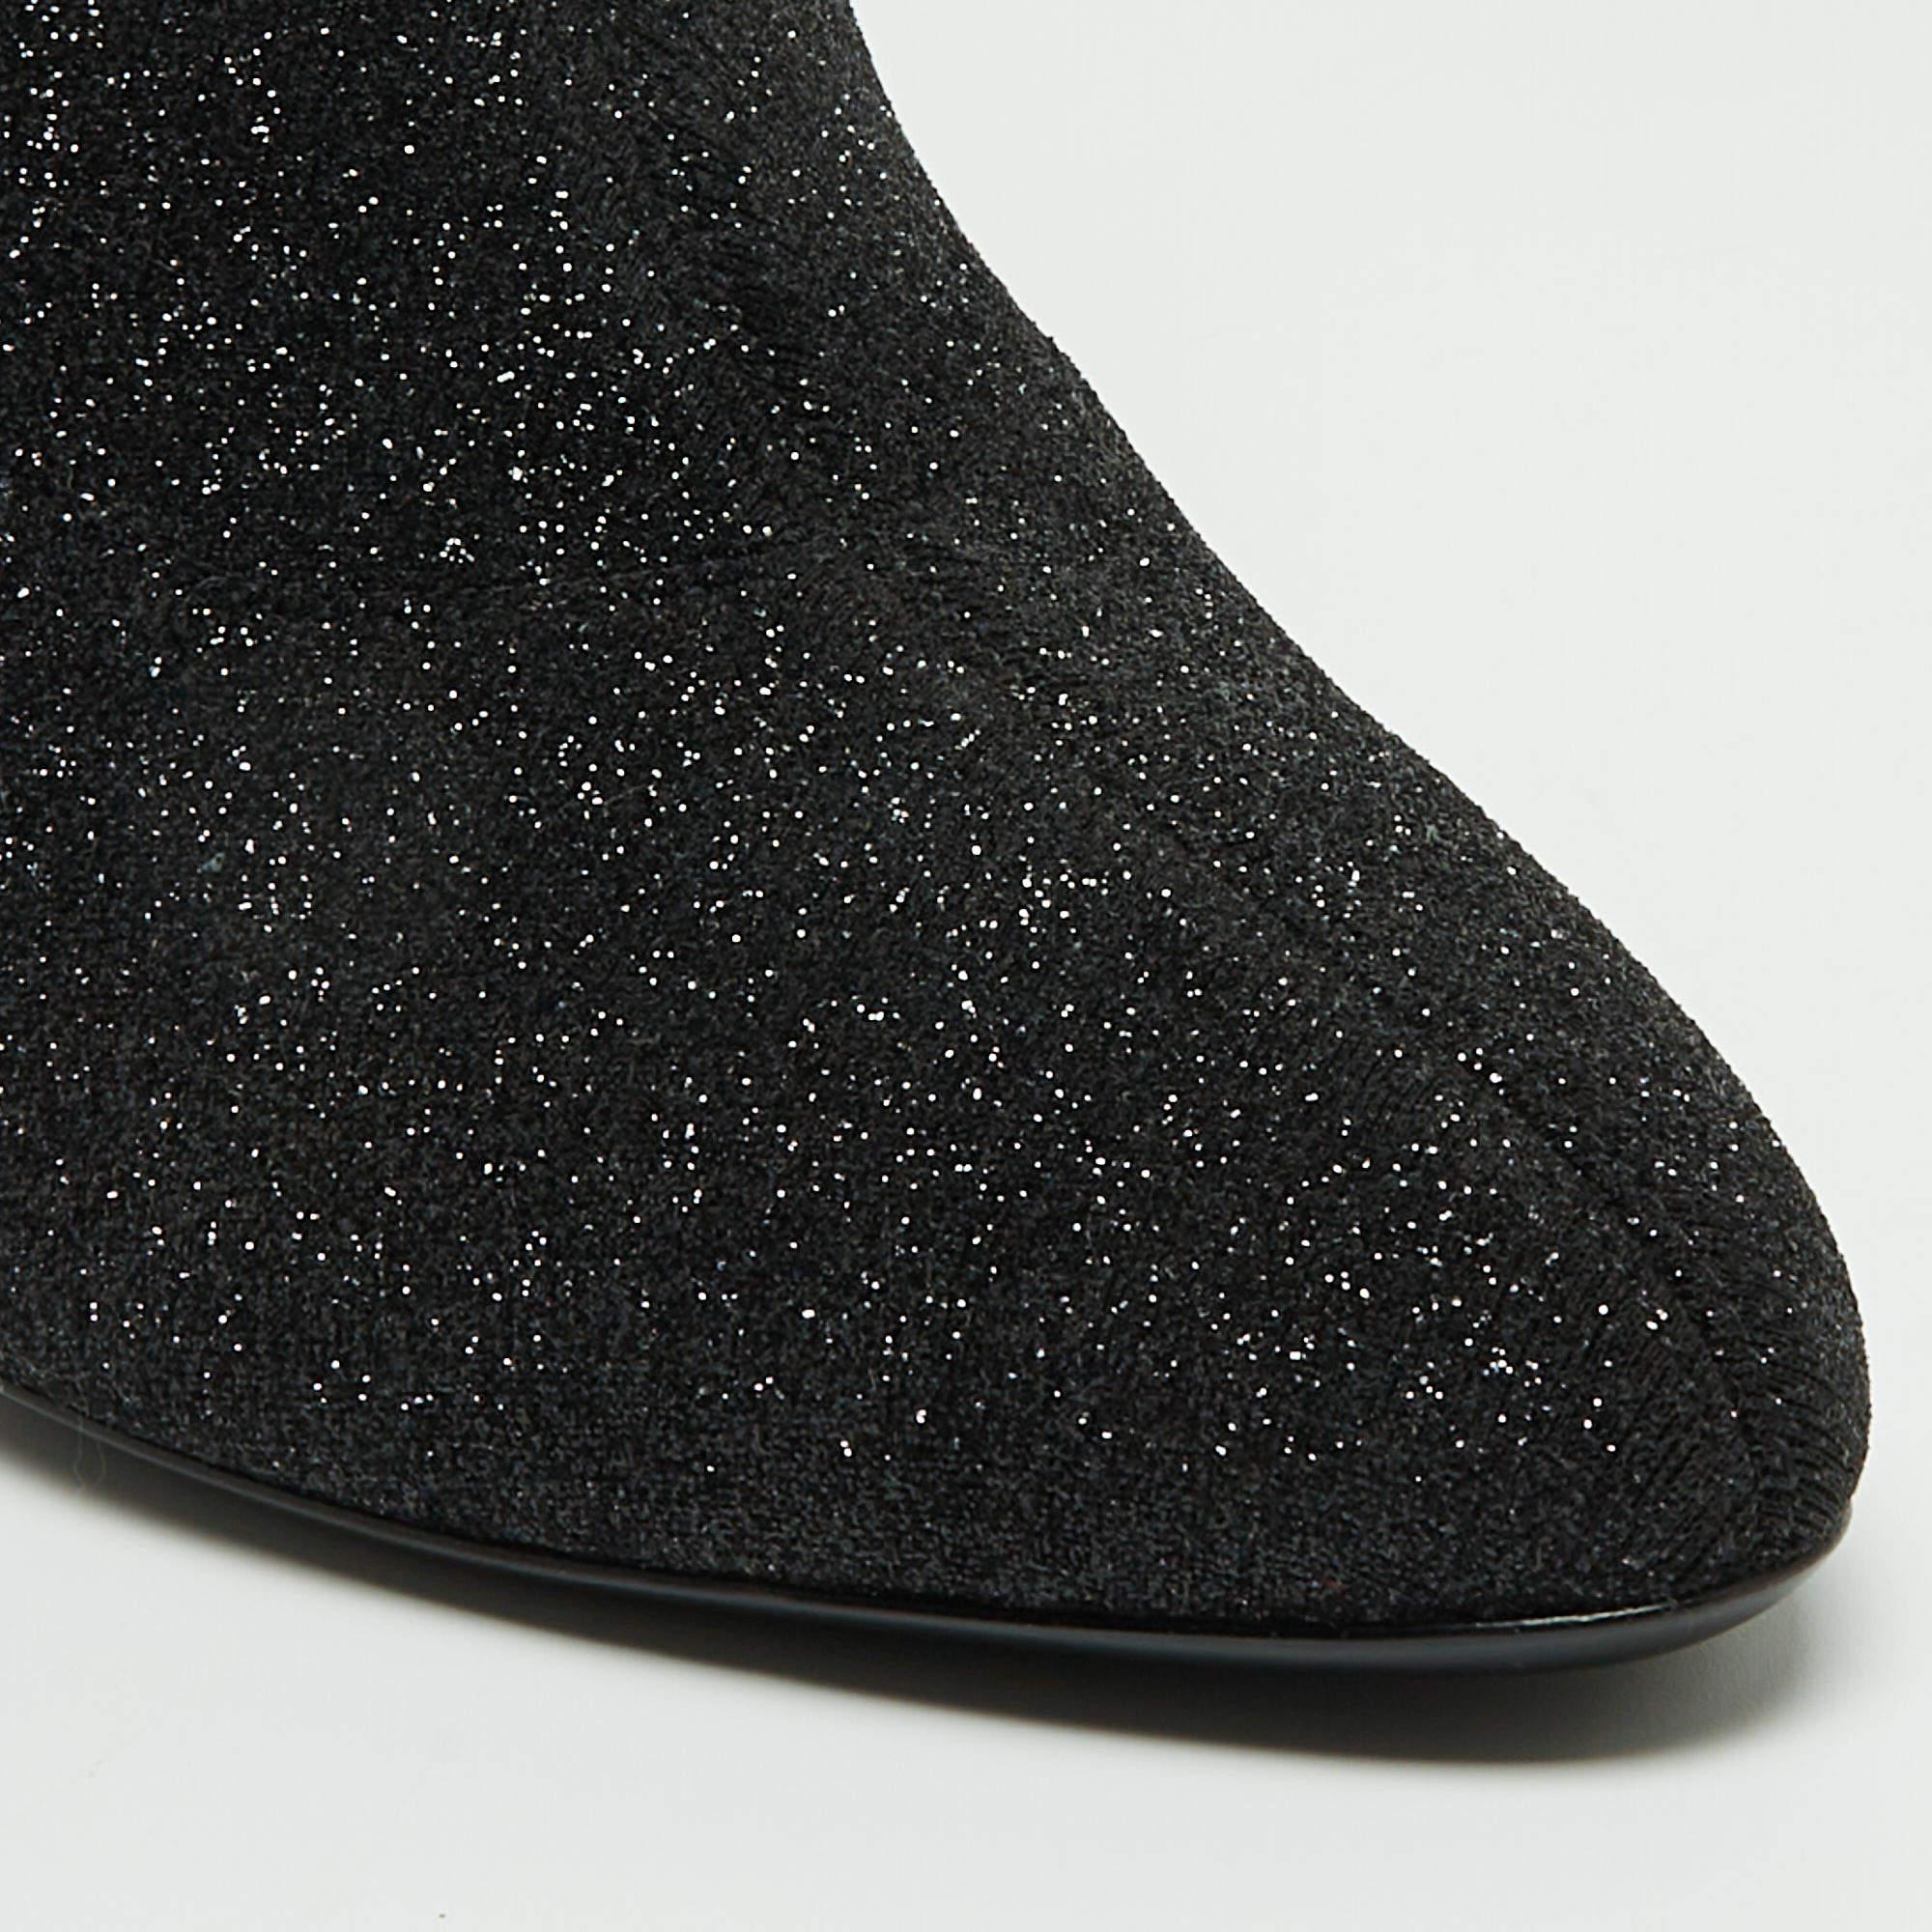 Giuseppe Zanotti Black Glitter Fabric Ankle Boots Size 41 For Sale 4